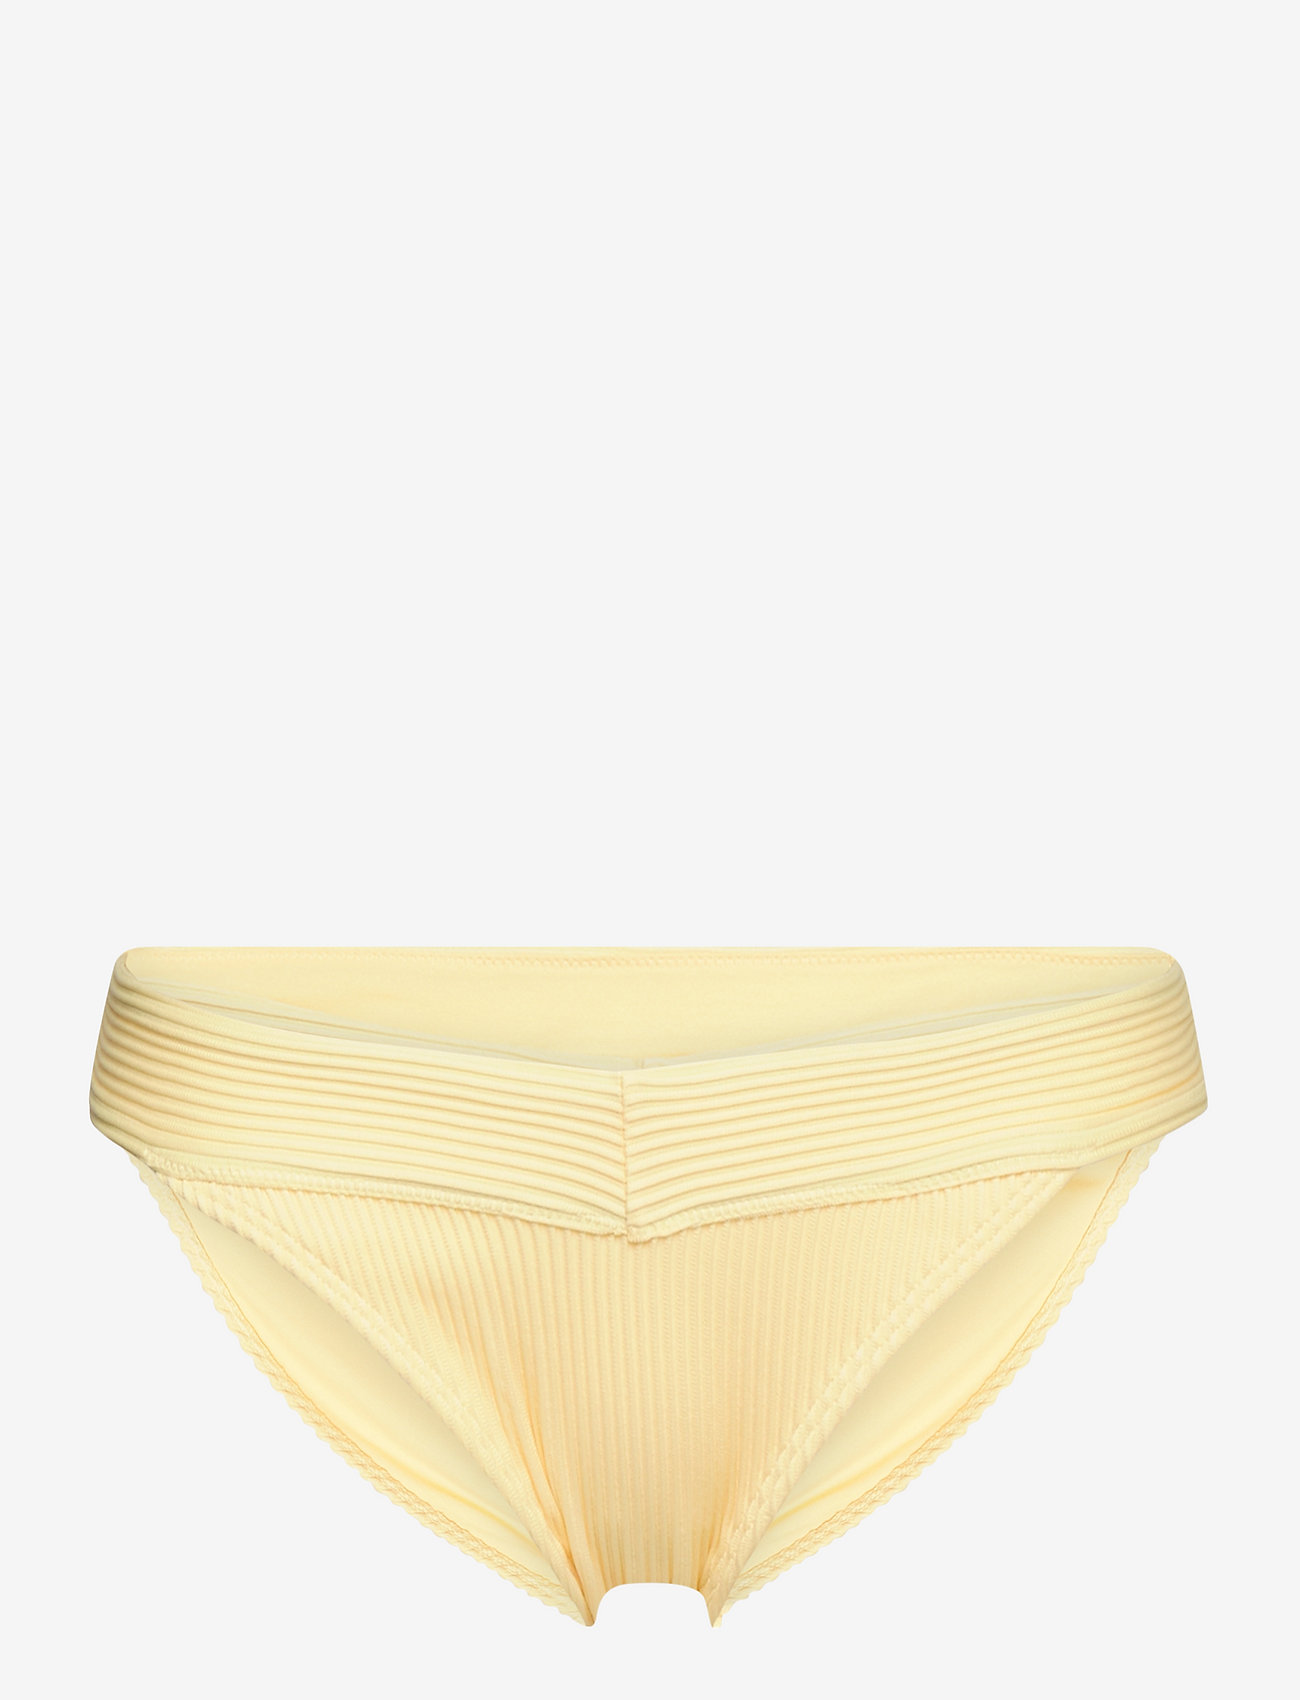 Hollister - HCo. GIRLS SWIM - bikinihousut - yellow - 0